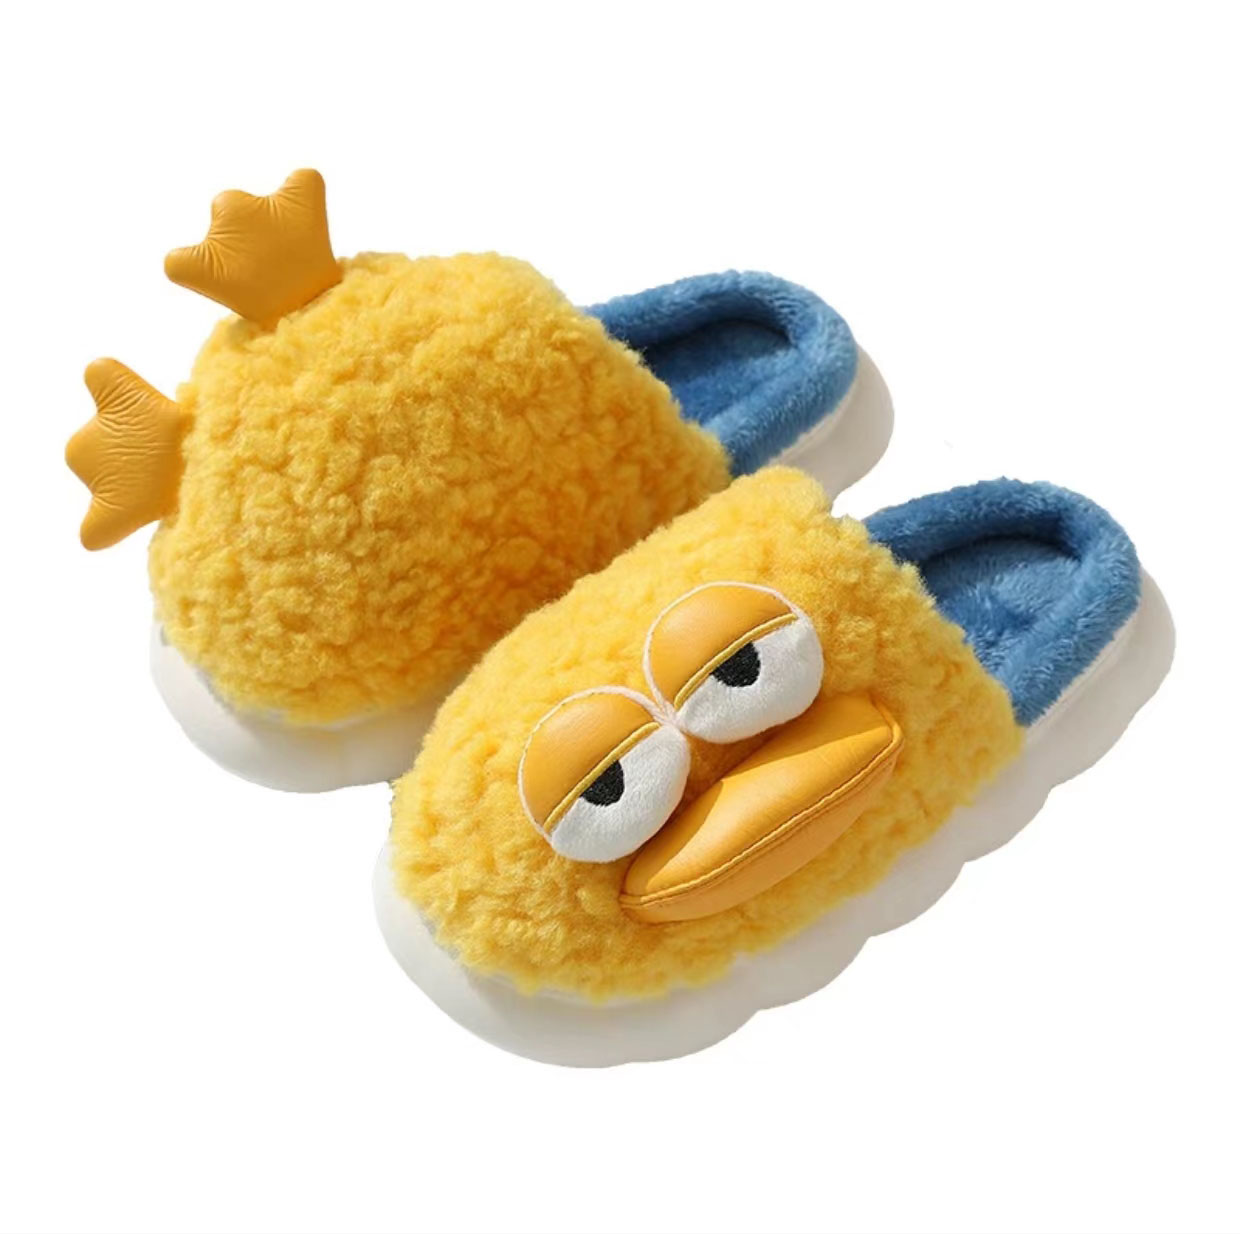 Cute yellow duck plush home slippers